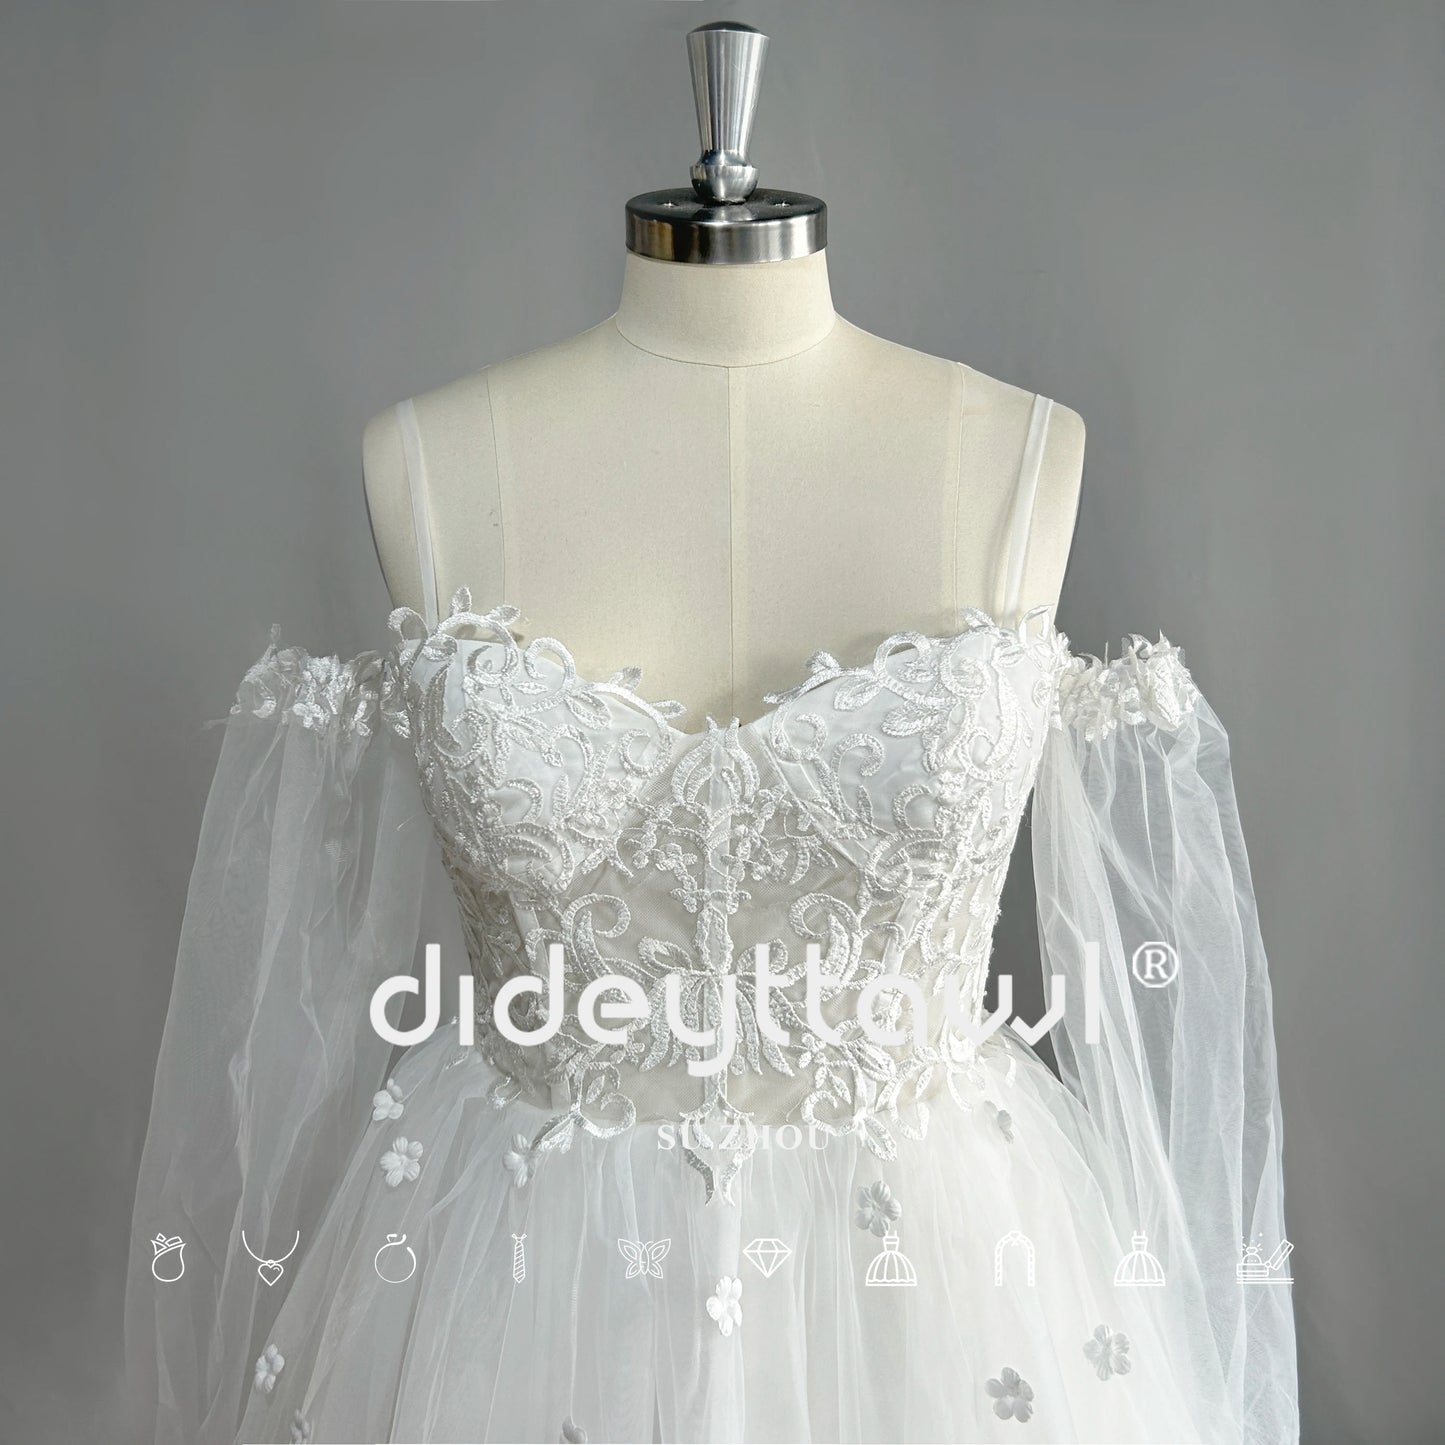 Dideyttawl kekasih lengan panjang tulle pakaian perkahwinan pendek mini panjang dari bahu gaun pengantin gambar sebenar